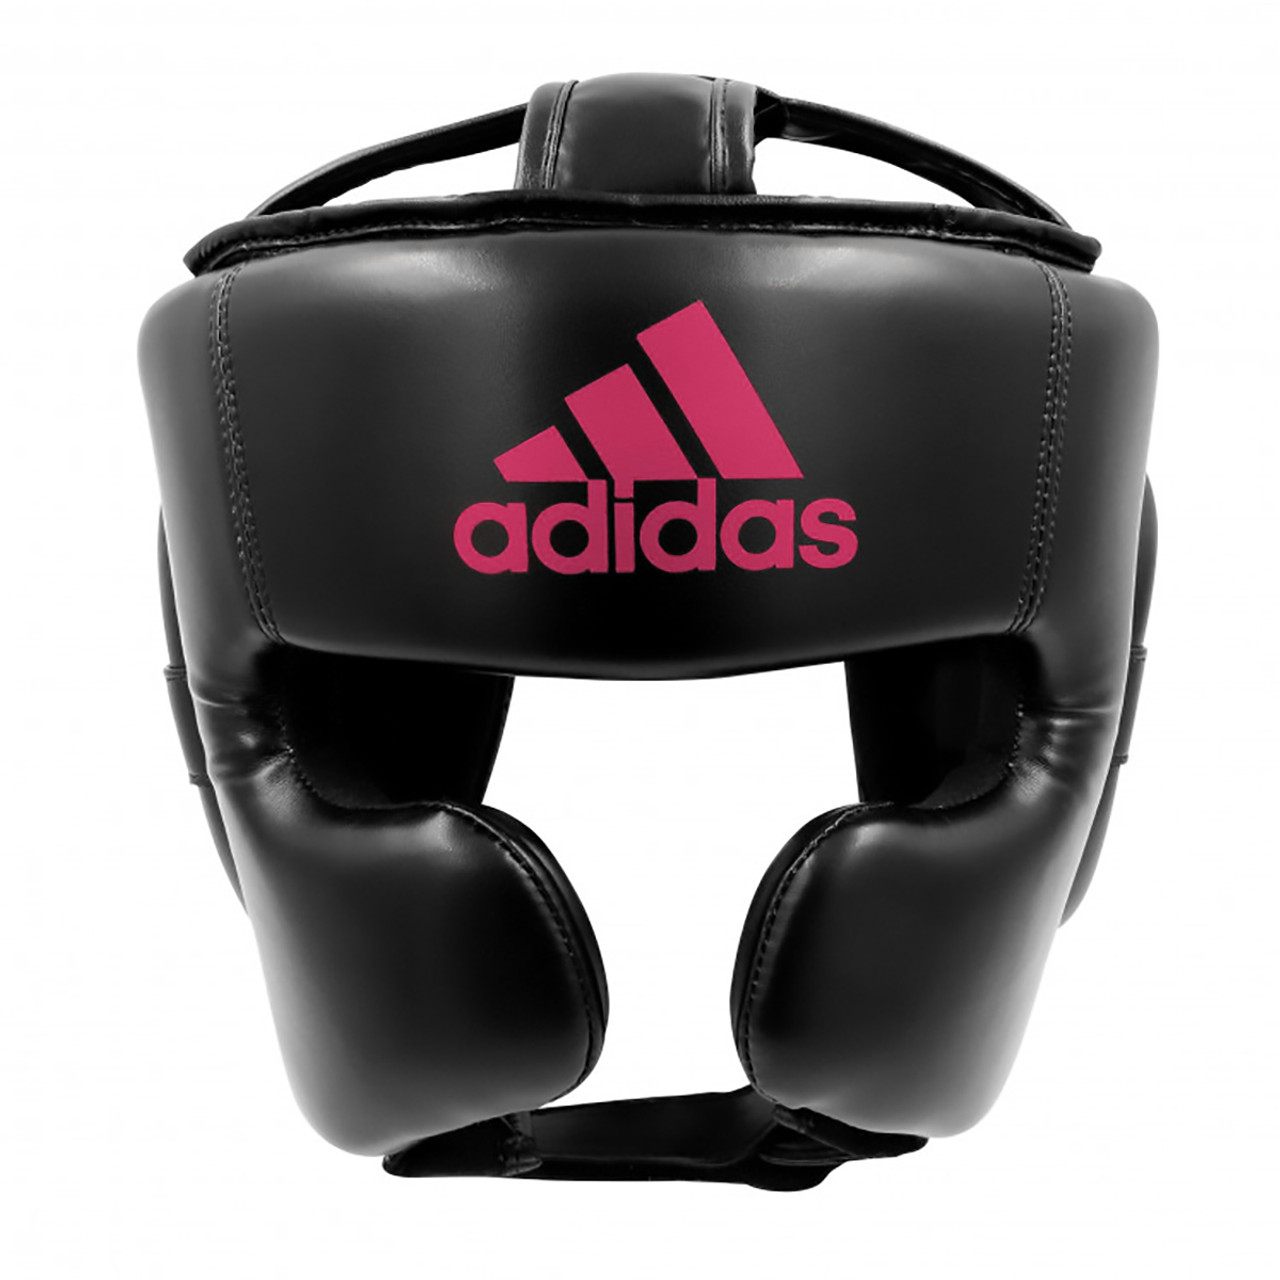 Adidas Super Boxing Training Headgear - Black, Pink - everysportforless.com